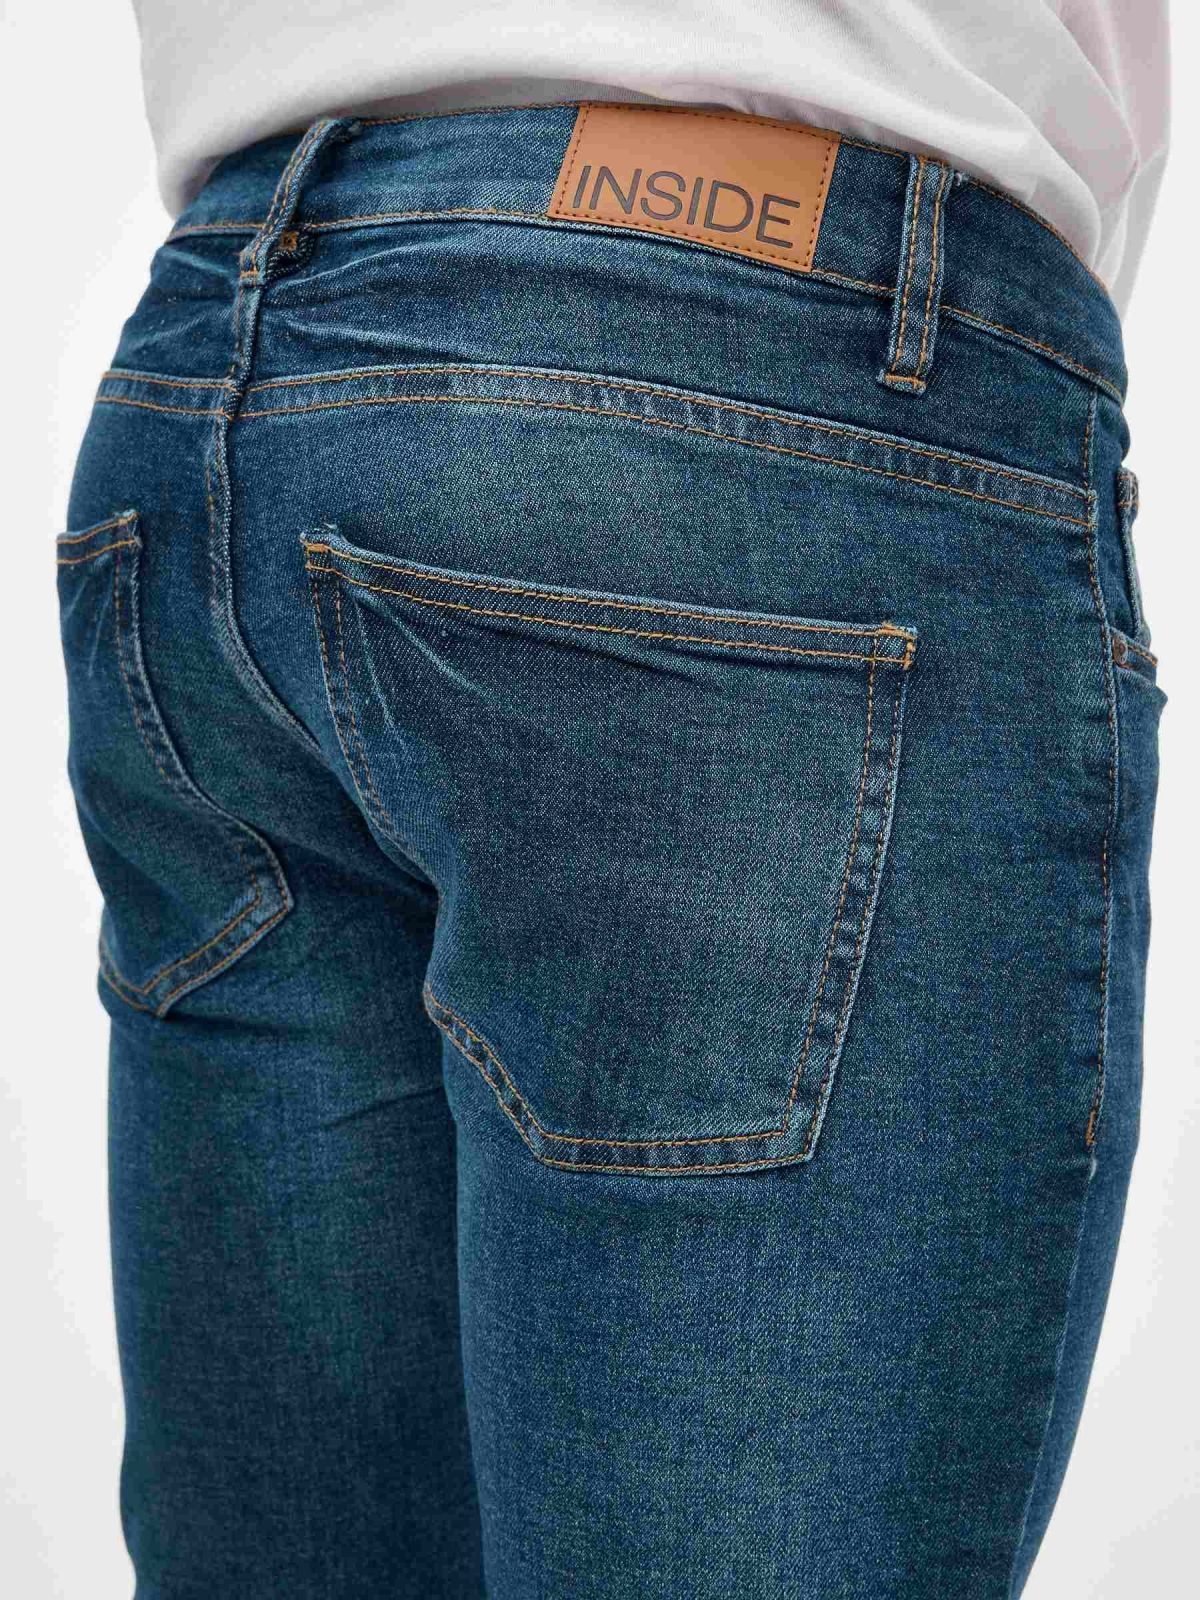 Regular denim jeans blue detail view